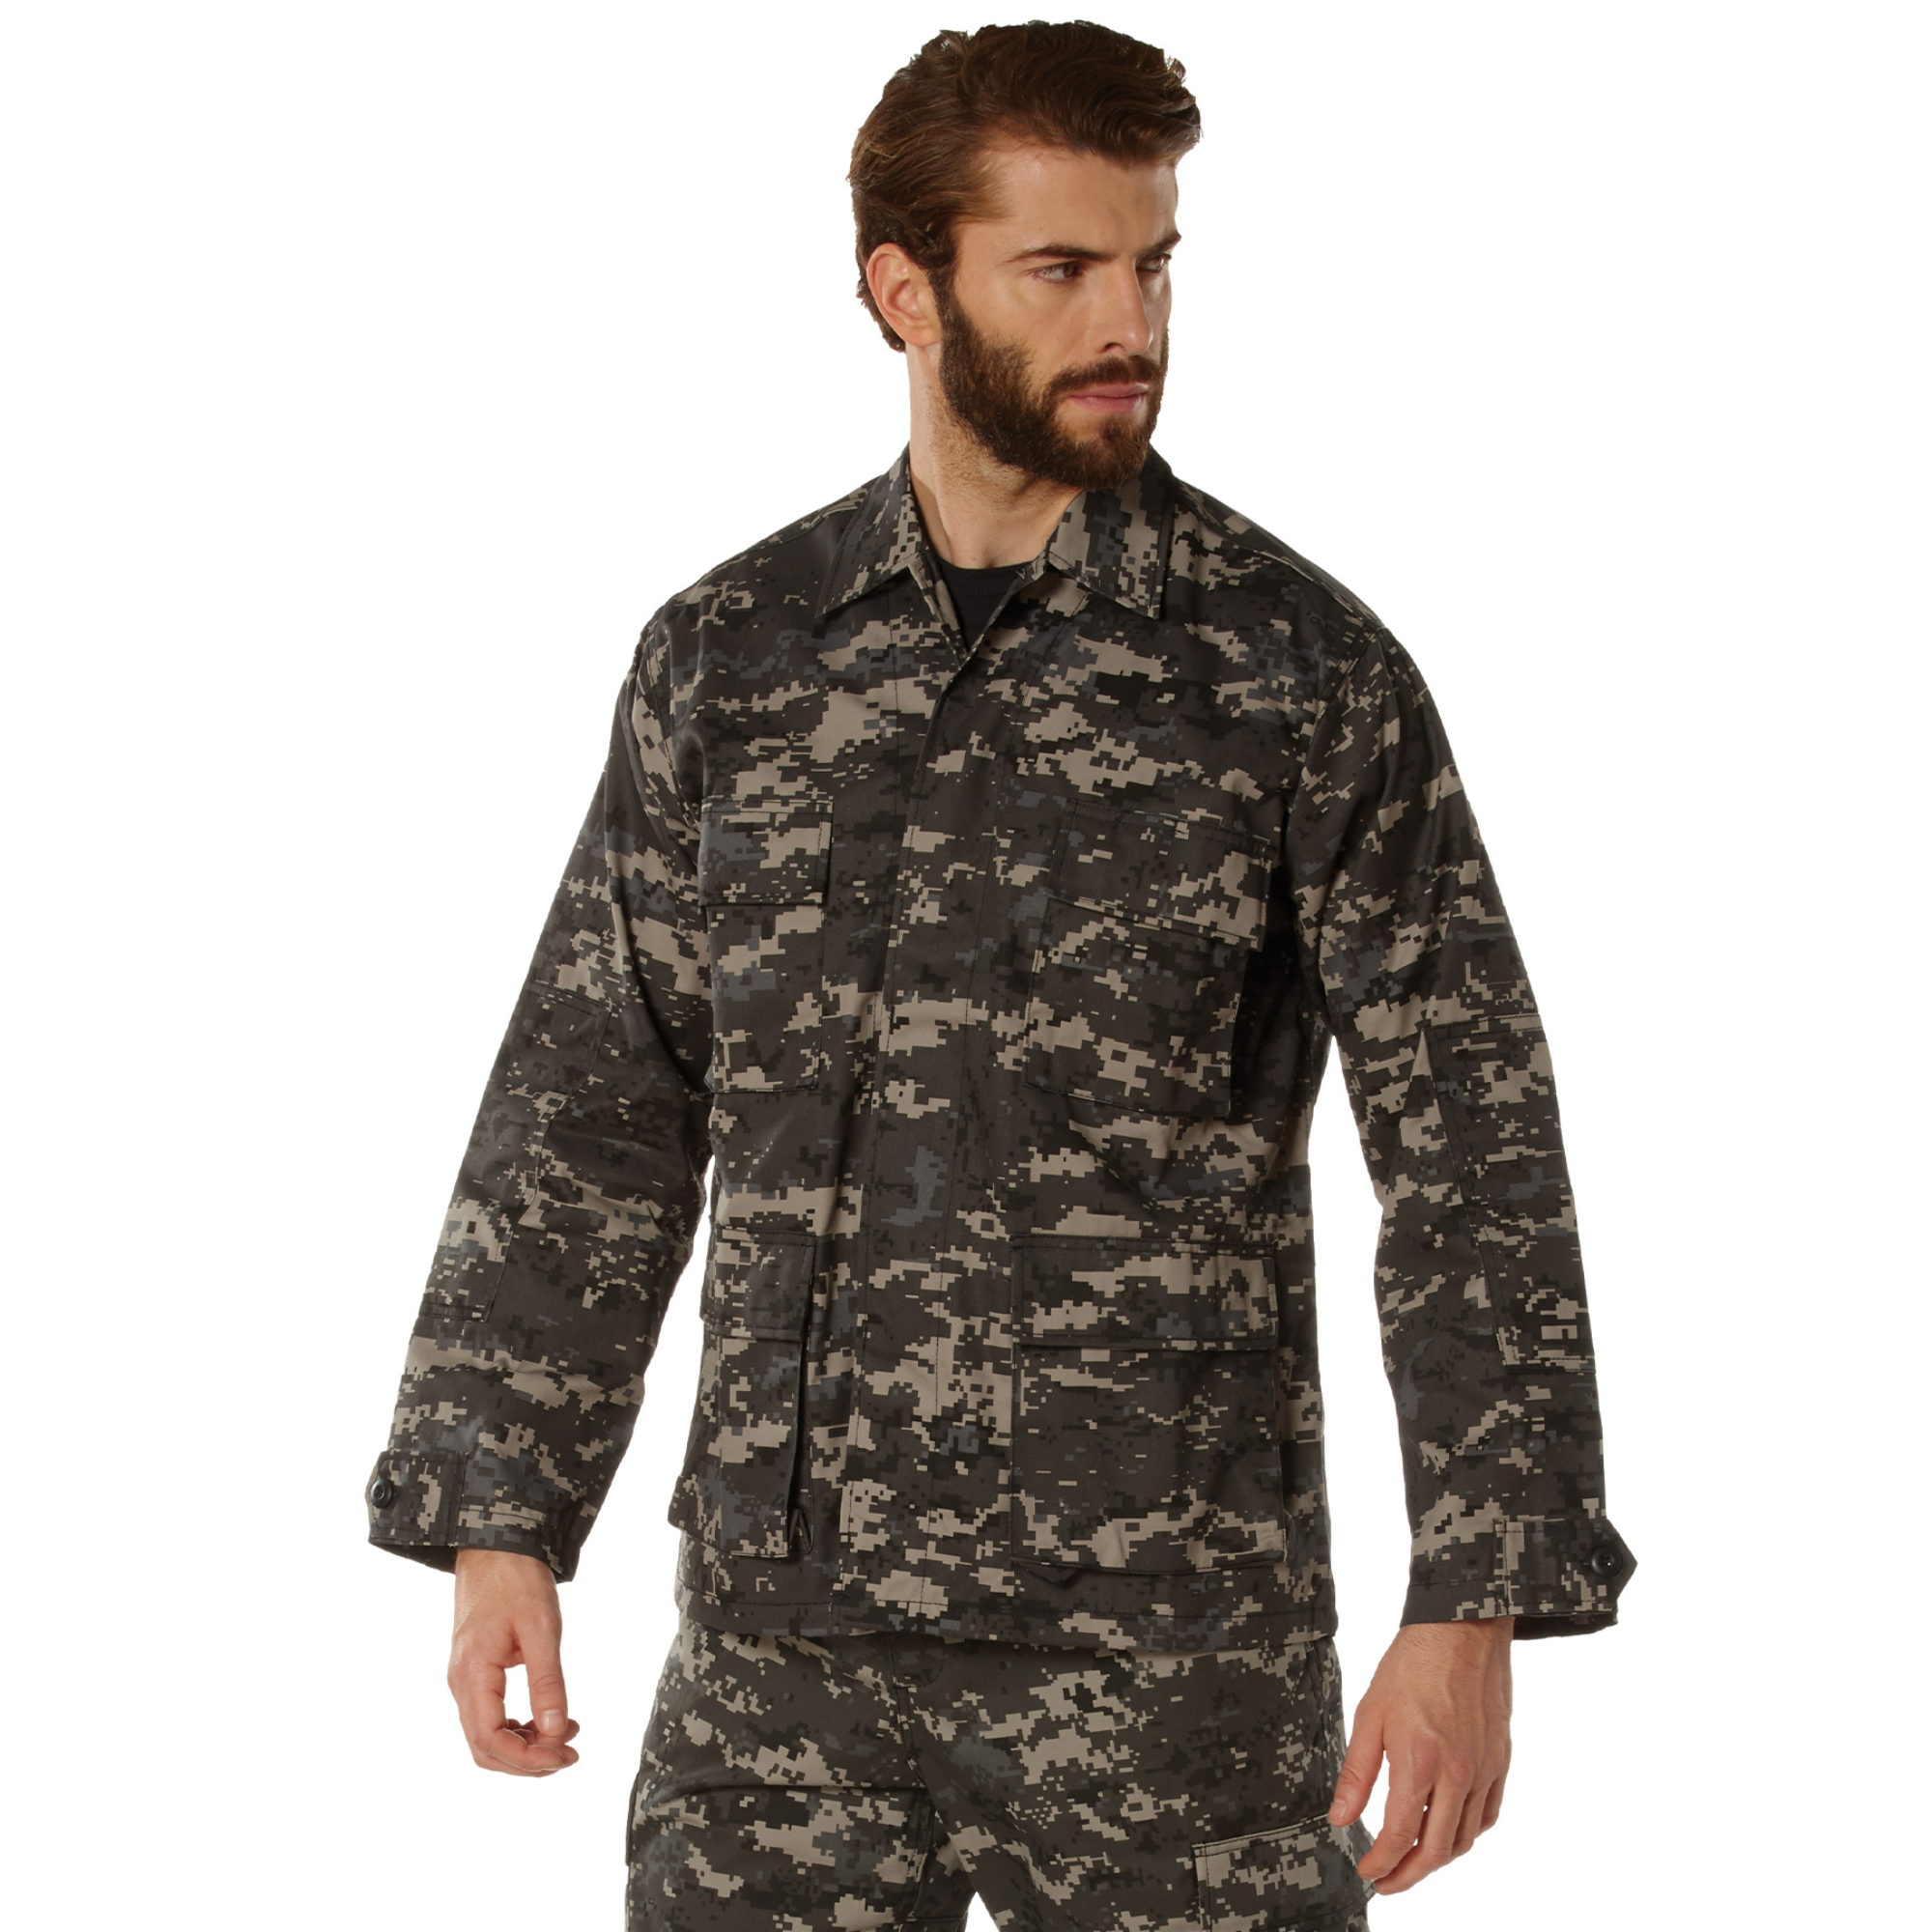 ACU Digital Camouflage - Military ACU Shirt - Polyester Cotton